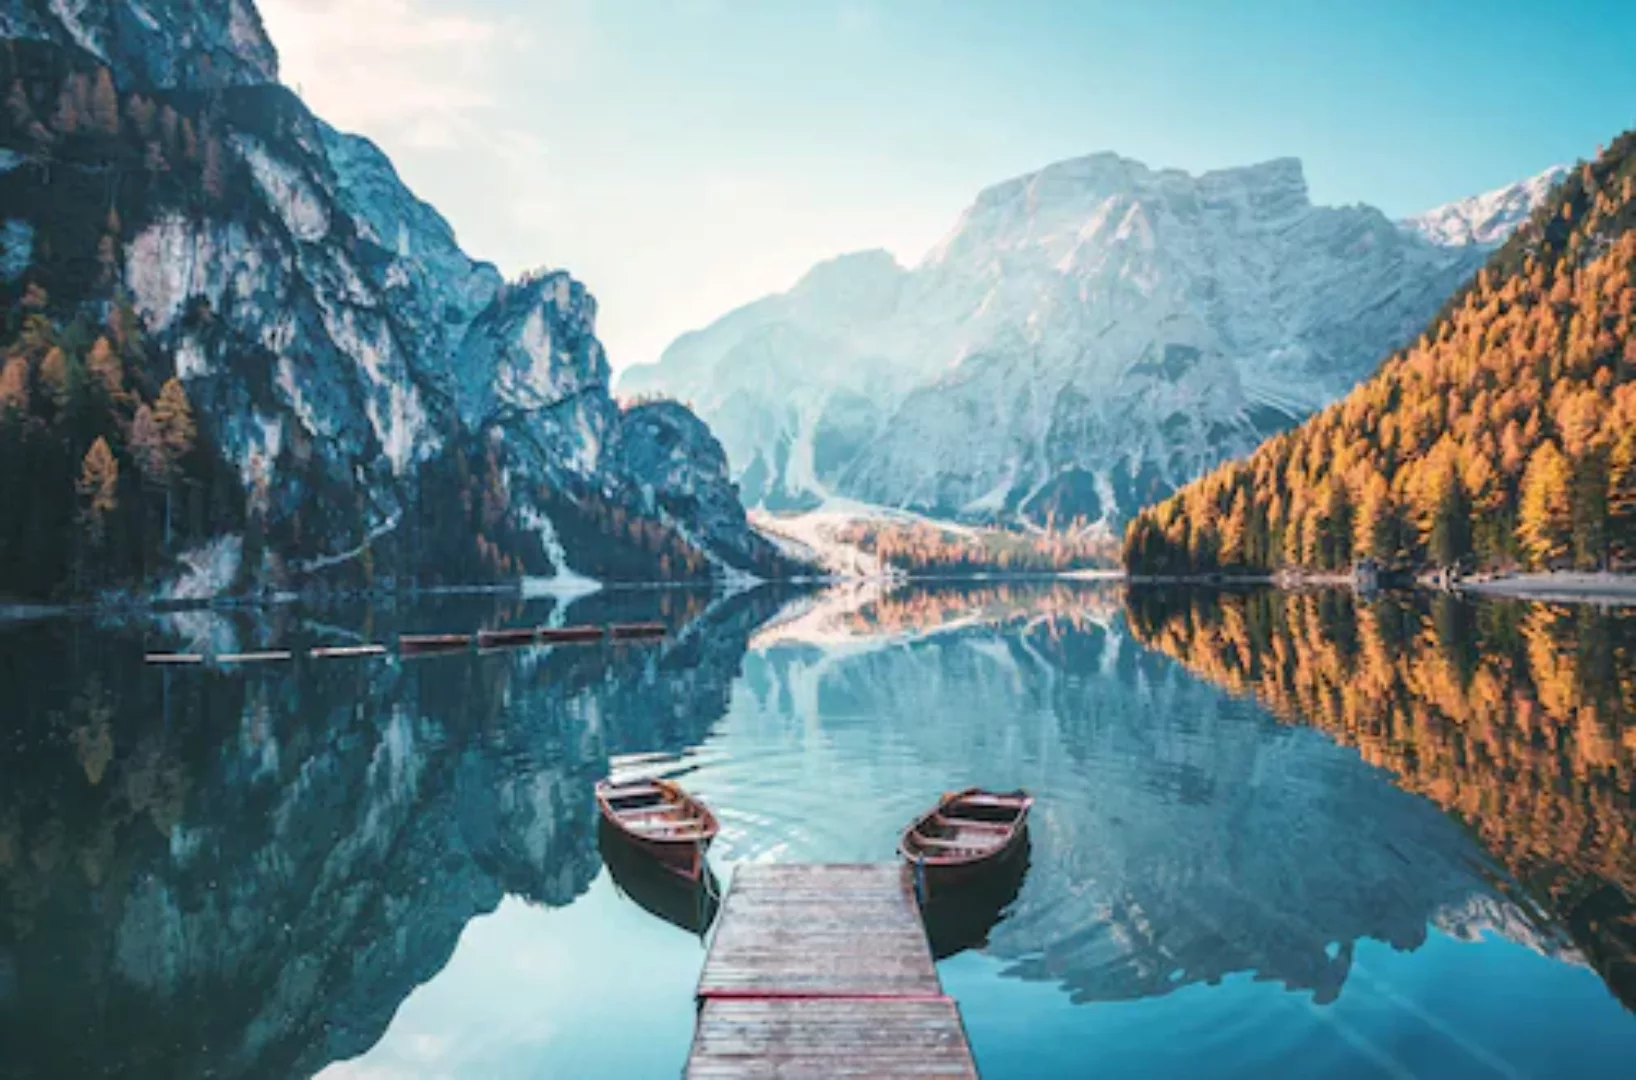 Bönninghoff Leinwandbild "Pragser Wildsee", Seelandschaft-Italien, (1 St.), günstig online kaufen